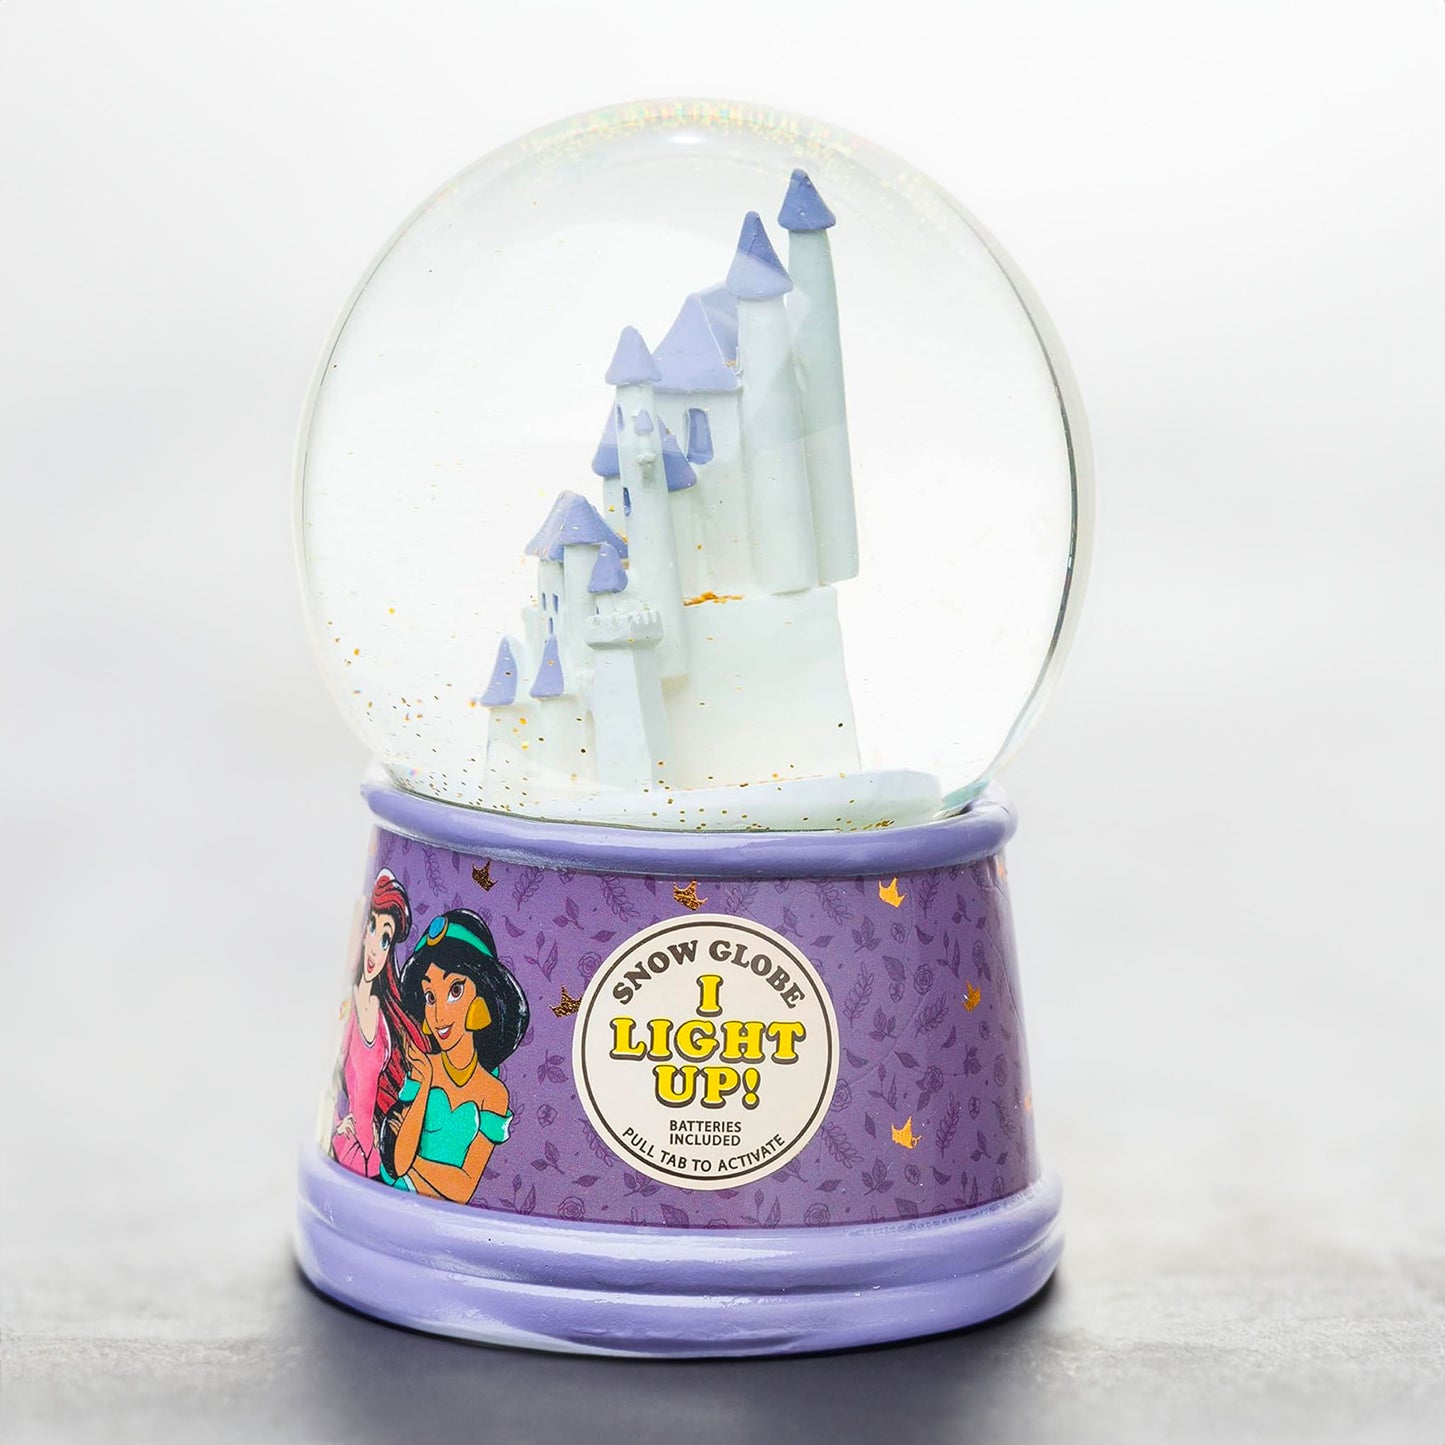 Castle & Princesses (Disney) Light-Up Glitter Snow Globe